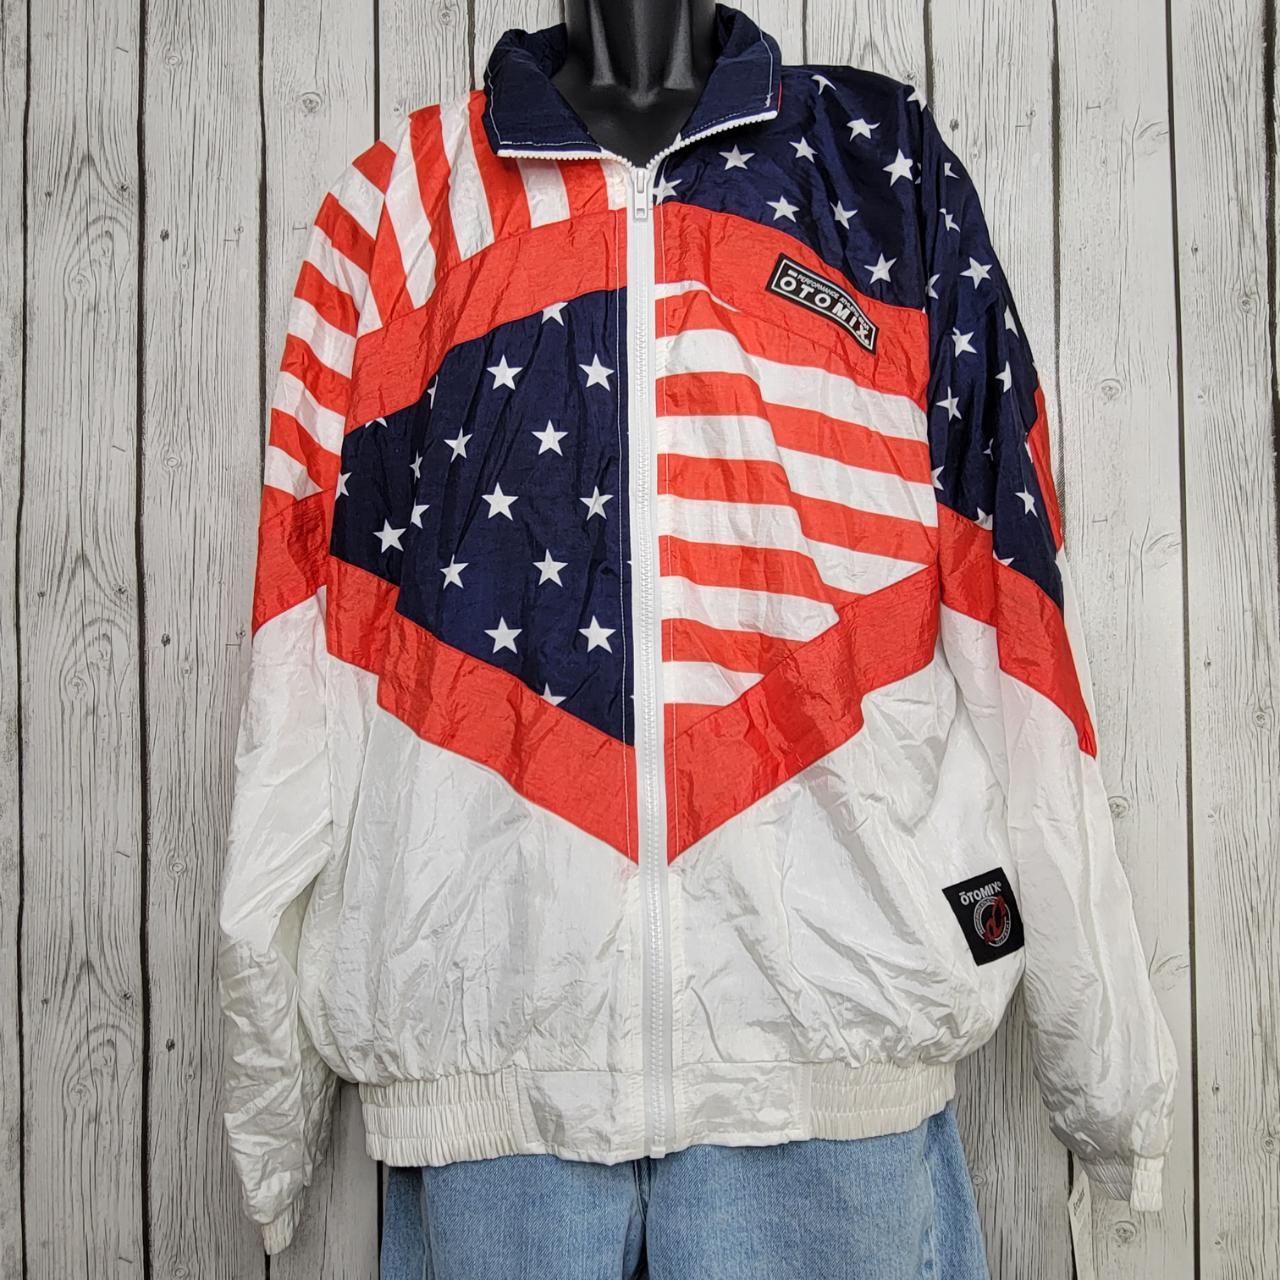 Vintage Otomix American Flag USA Jacket This jacket... - Depop